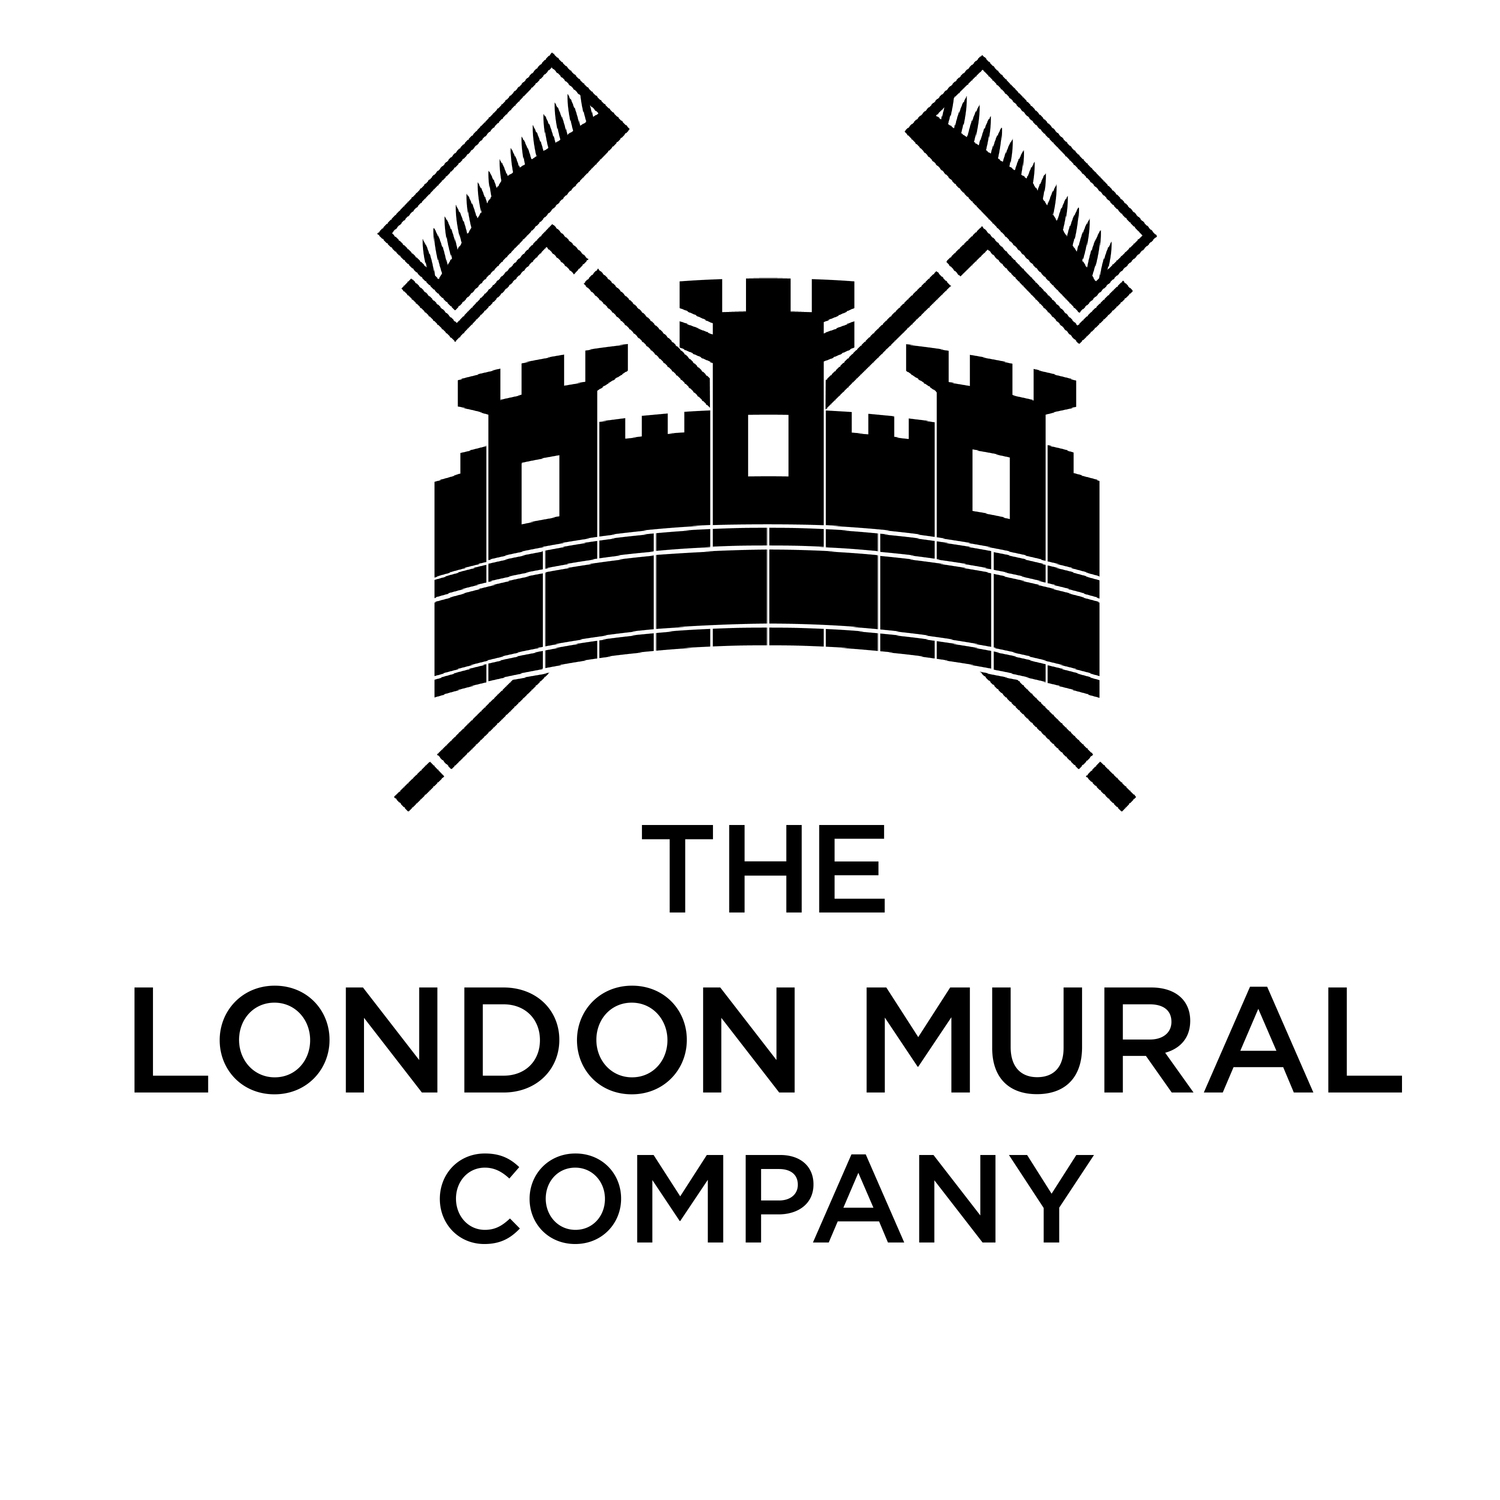 The London Mural Company